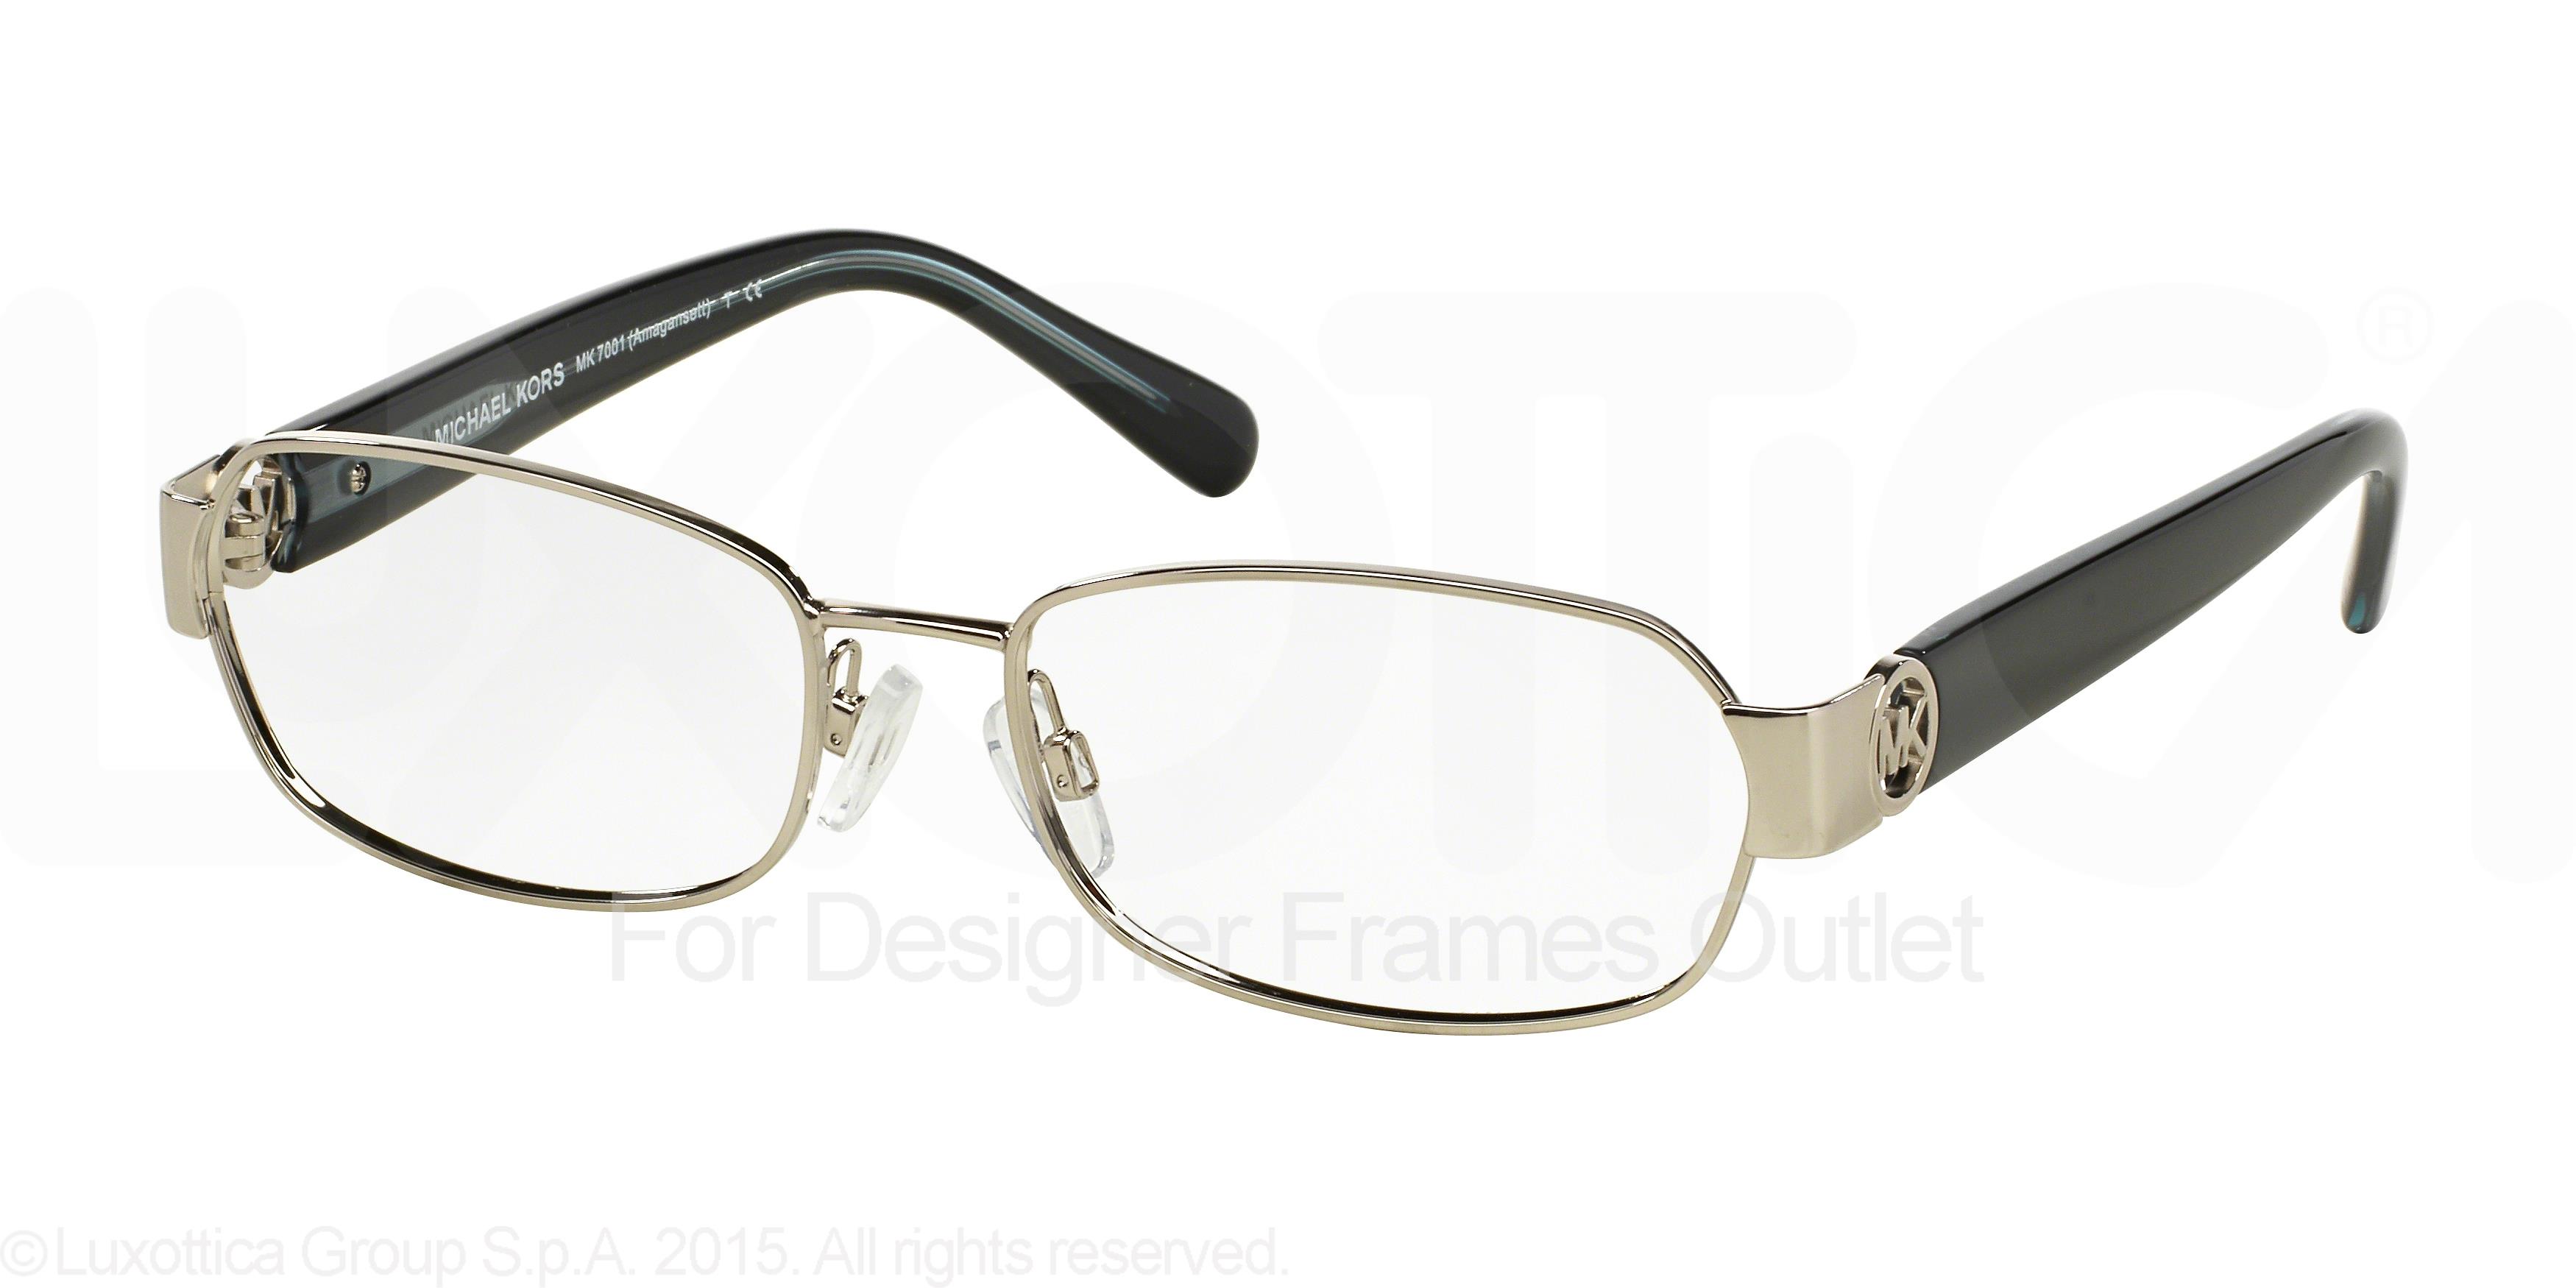 Buy Michael Kors Womens Glasses Online  Vision Express